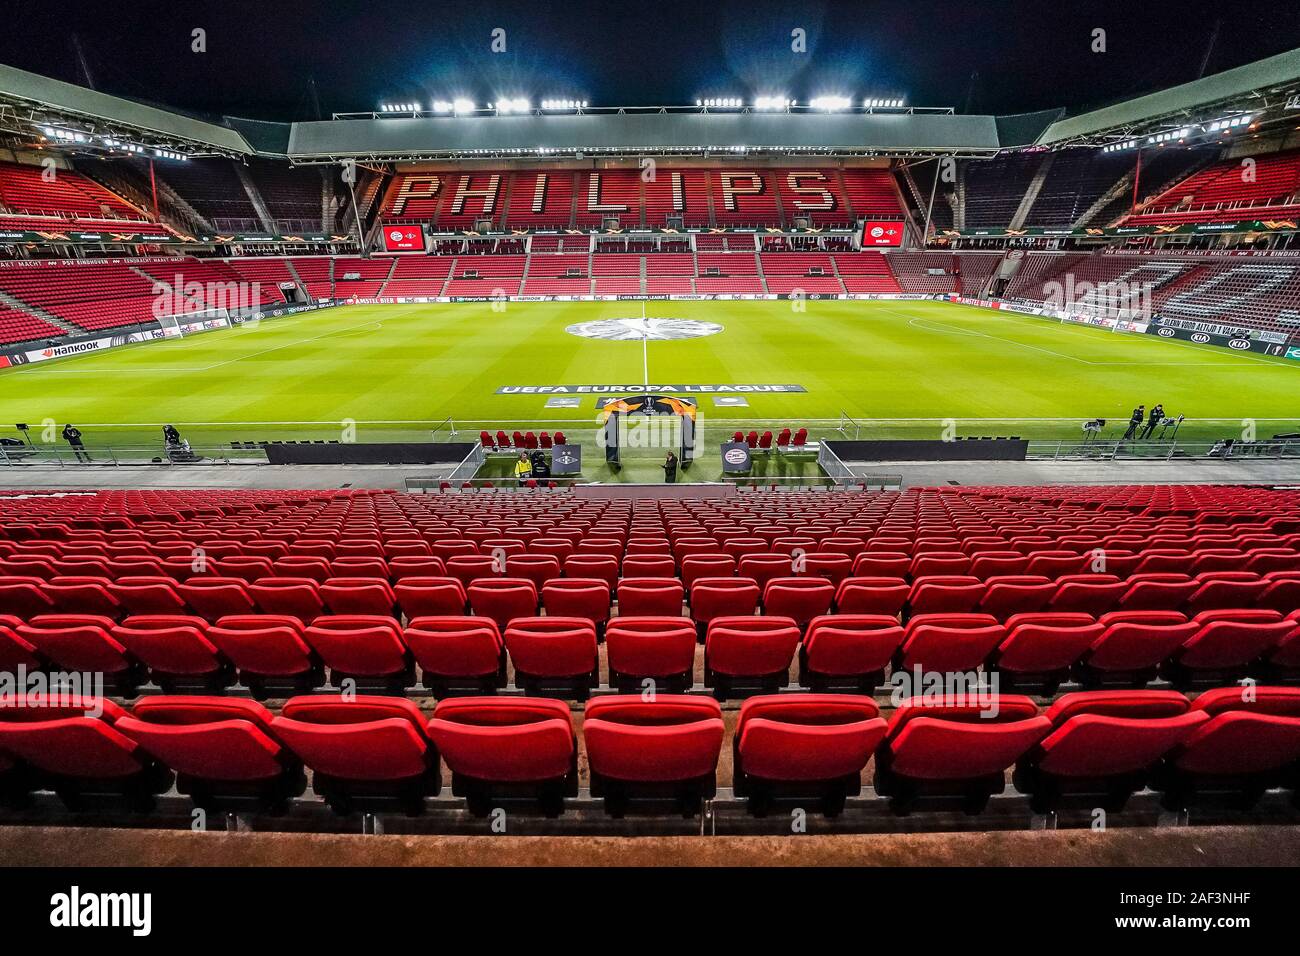 EINDHOVEN, PSV - Rosenborg BK, 12-12-2019, football, season 2019-2020, Europa League Group Stage, Philips Stadium, overview of the stadium Stock Photo